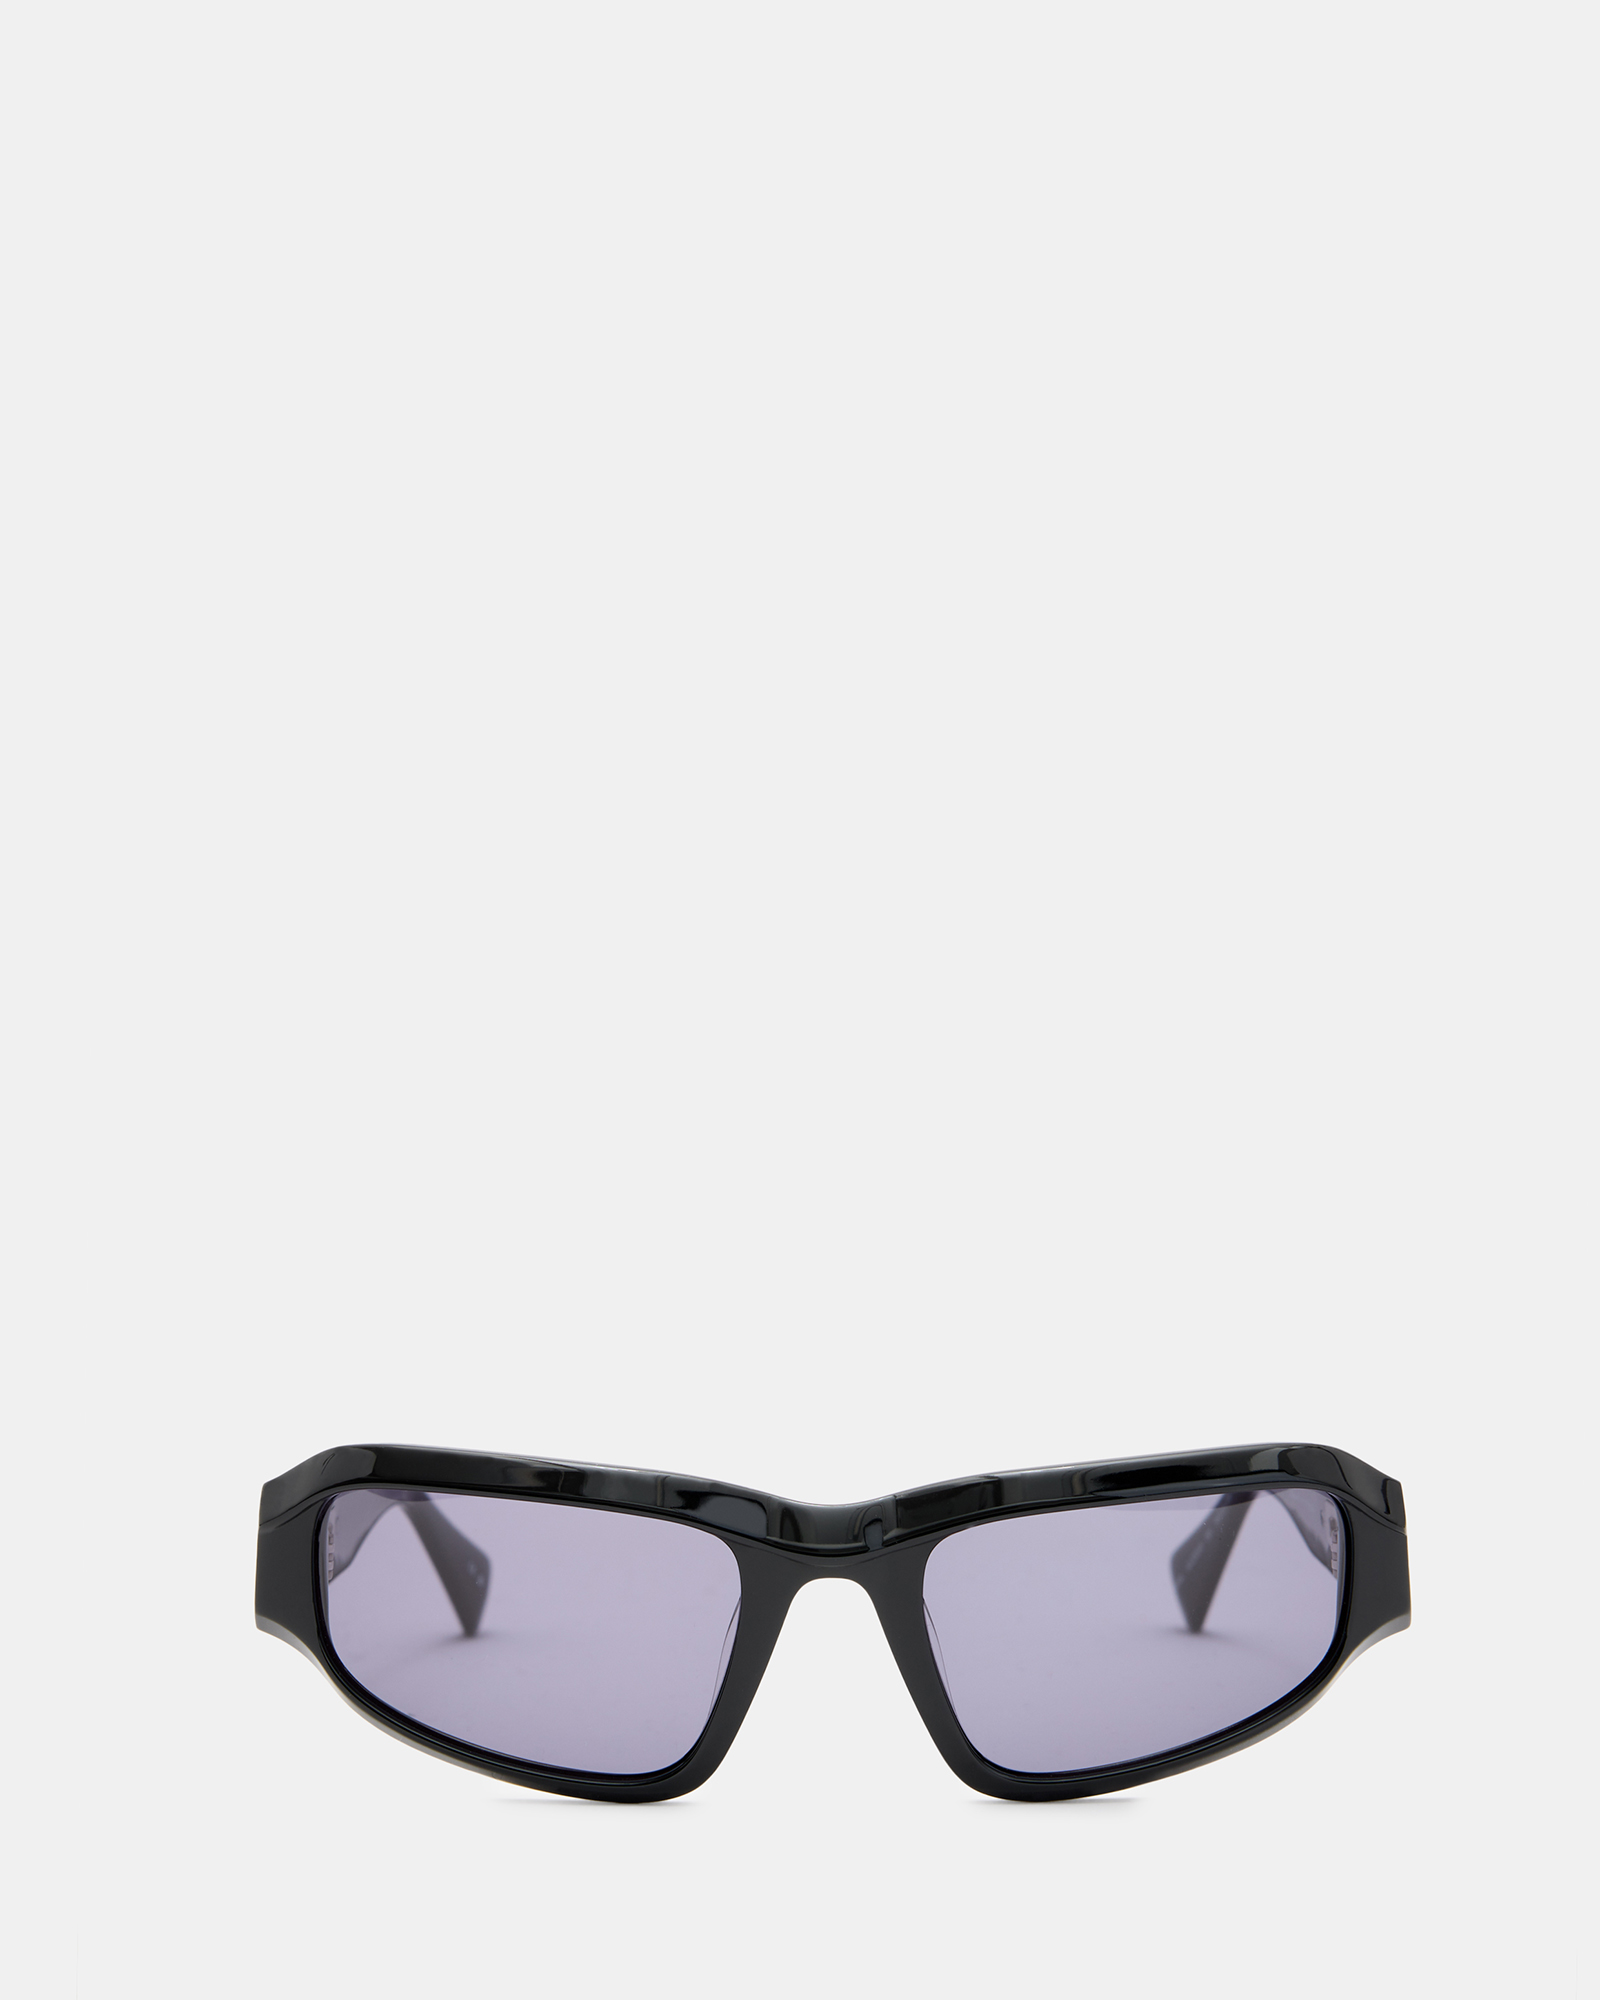 AllSaints Anderson Angular Wrap Around Sunglasses,, GLOSS BLACK